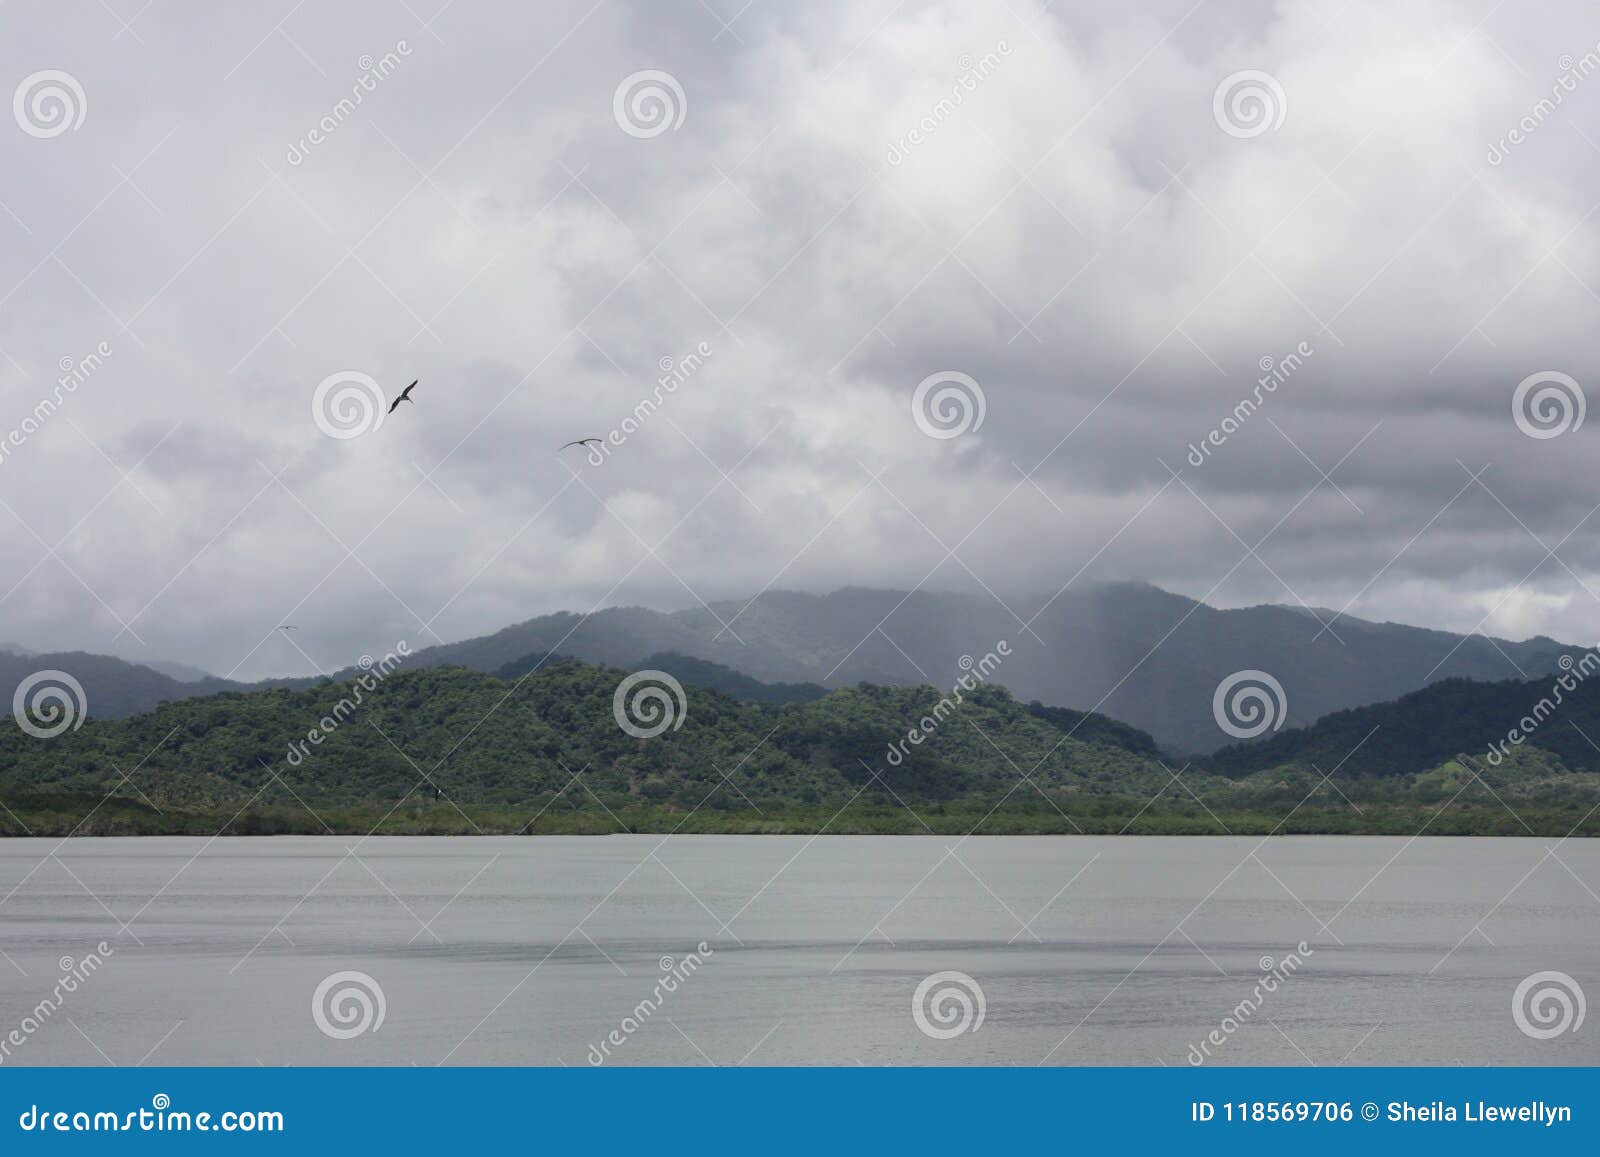 ocean shoreline showing mountain range low clouds bird in flight